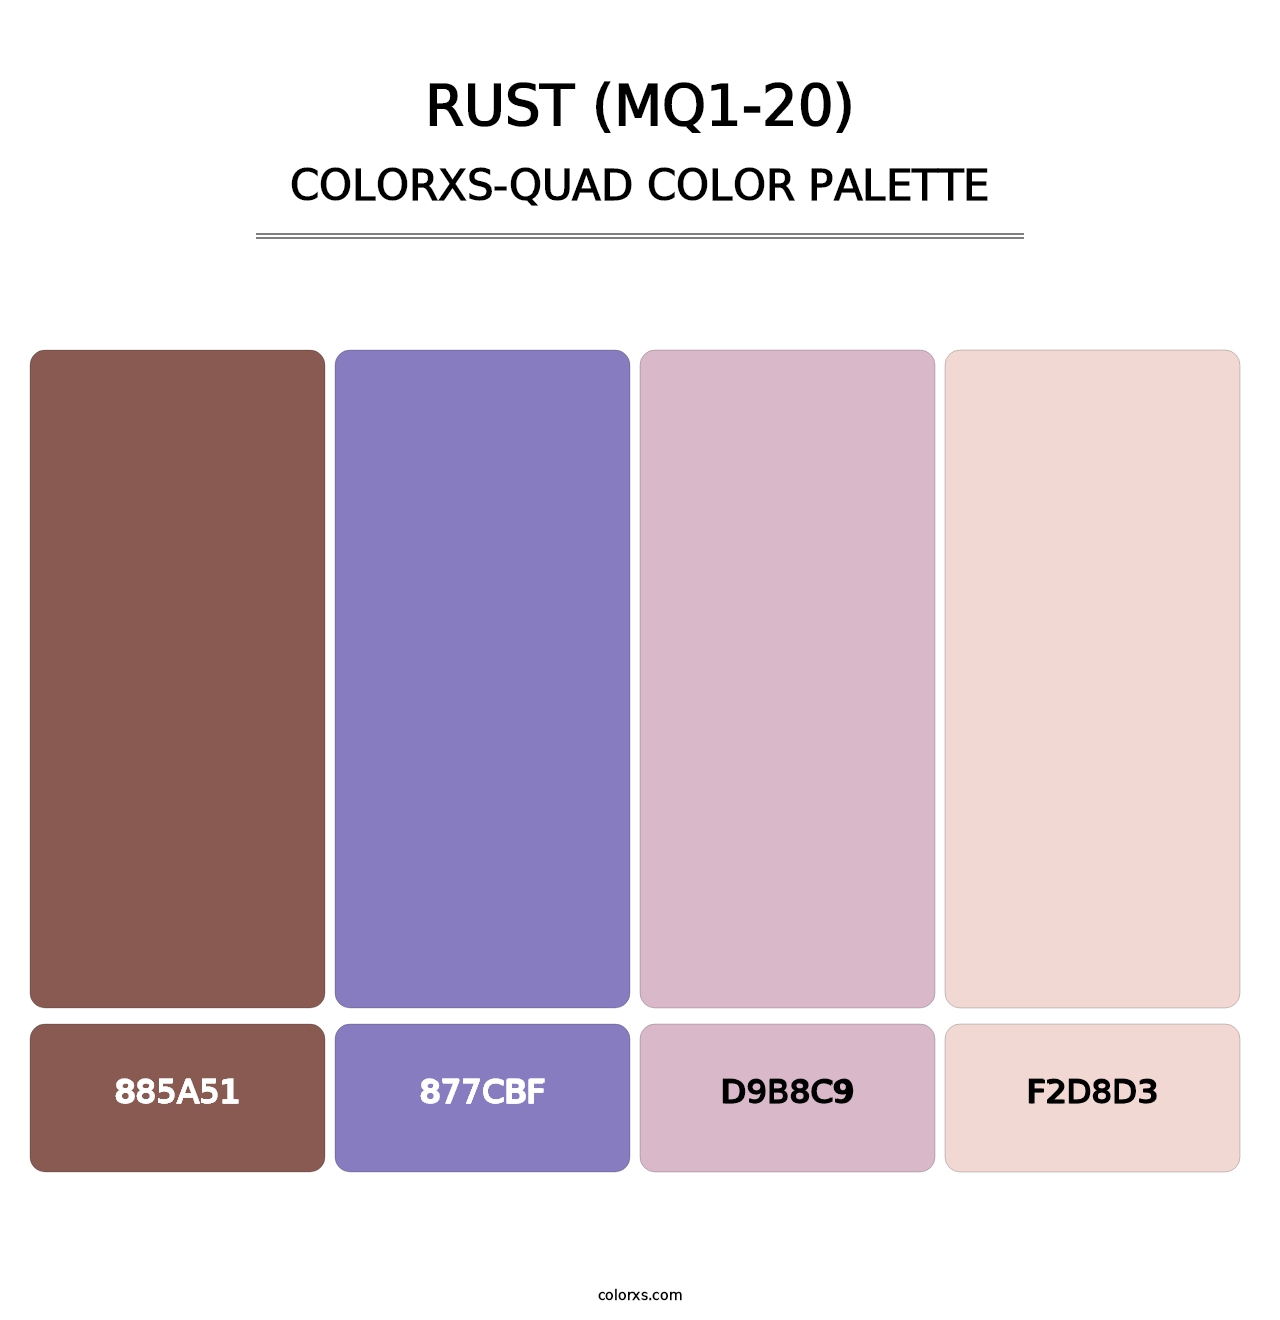 Rust (MQ1-20) - Colorxs Quad Palette